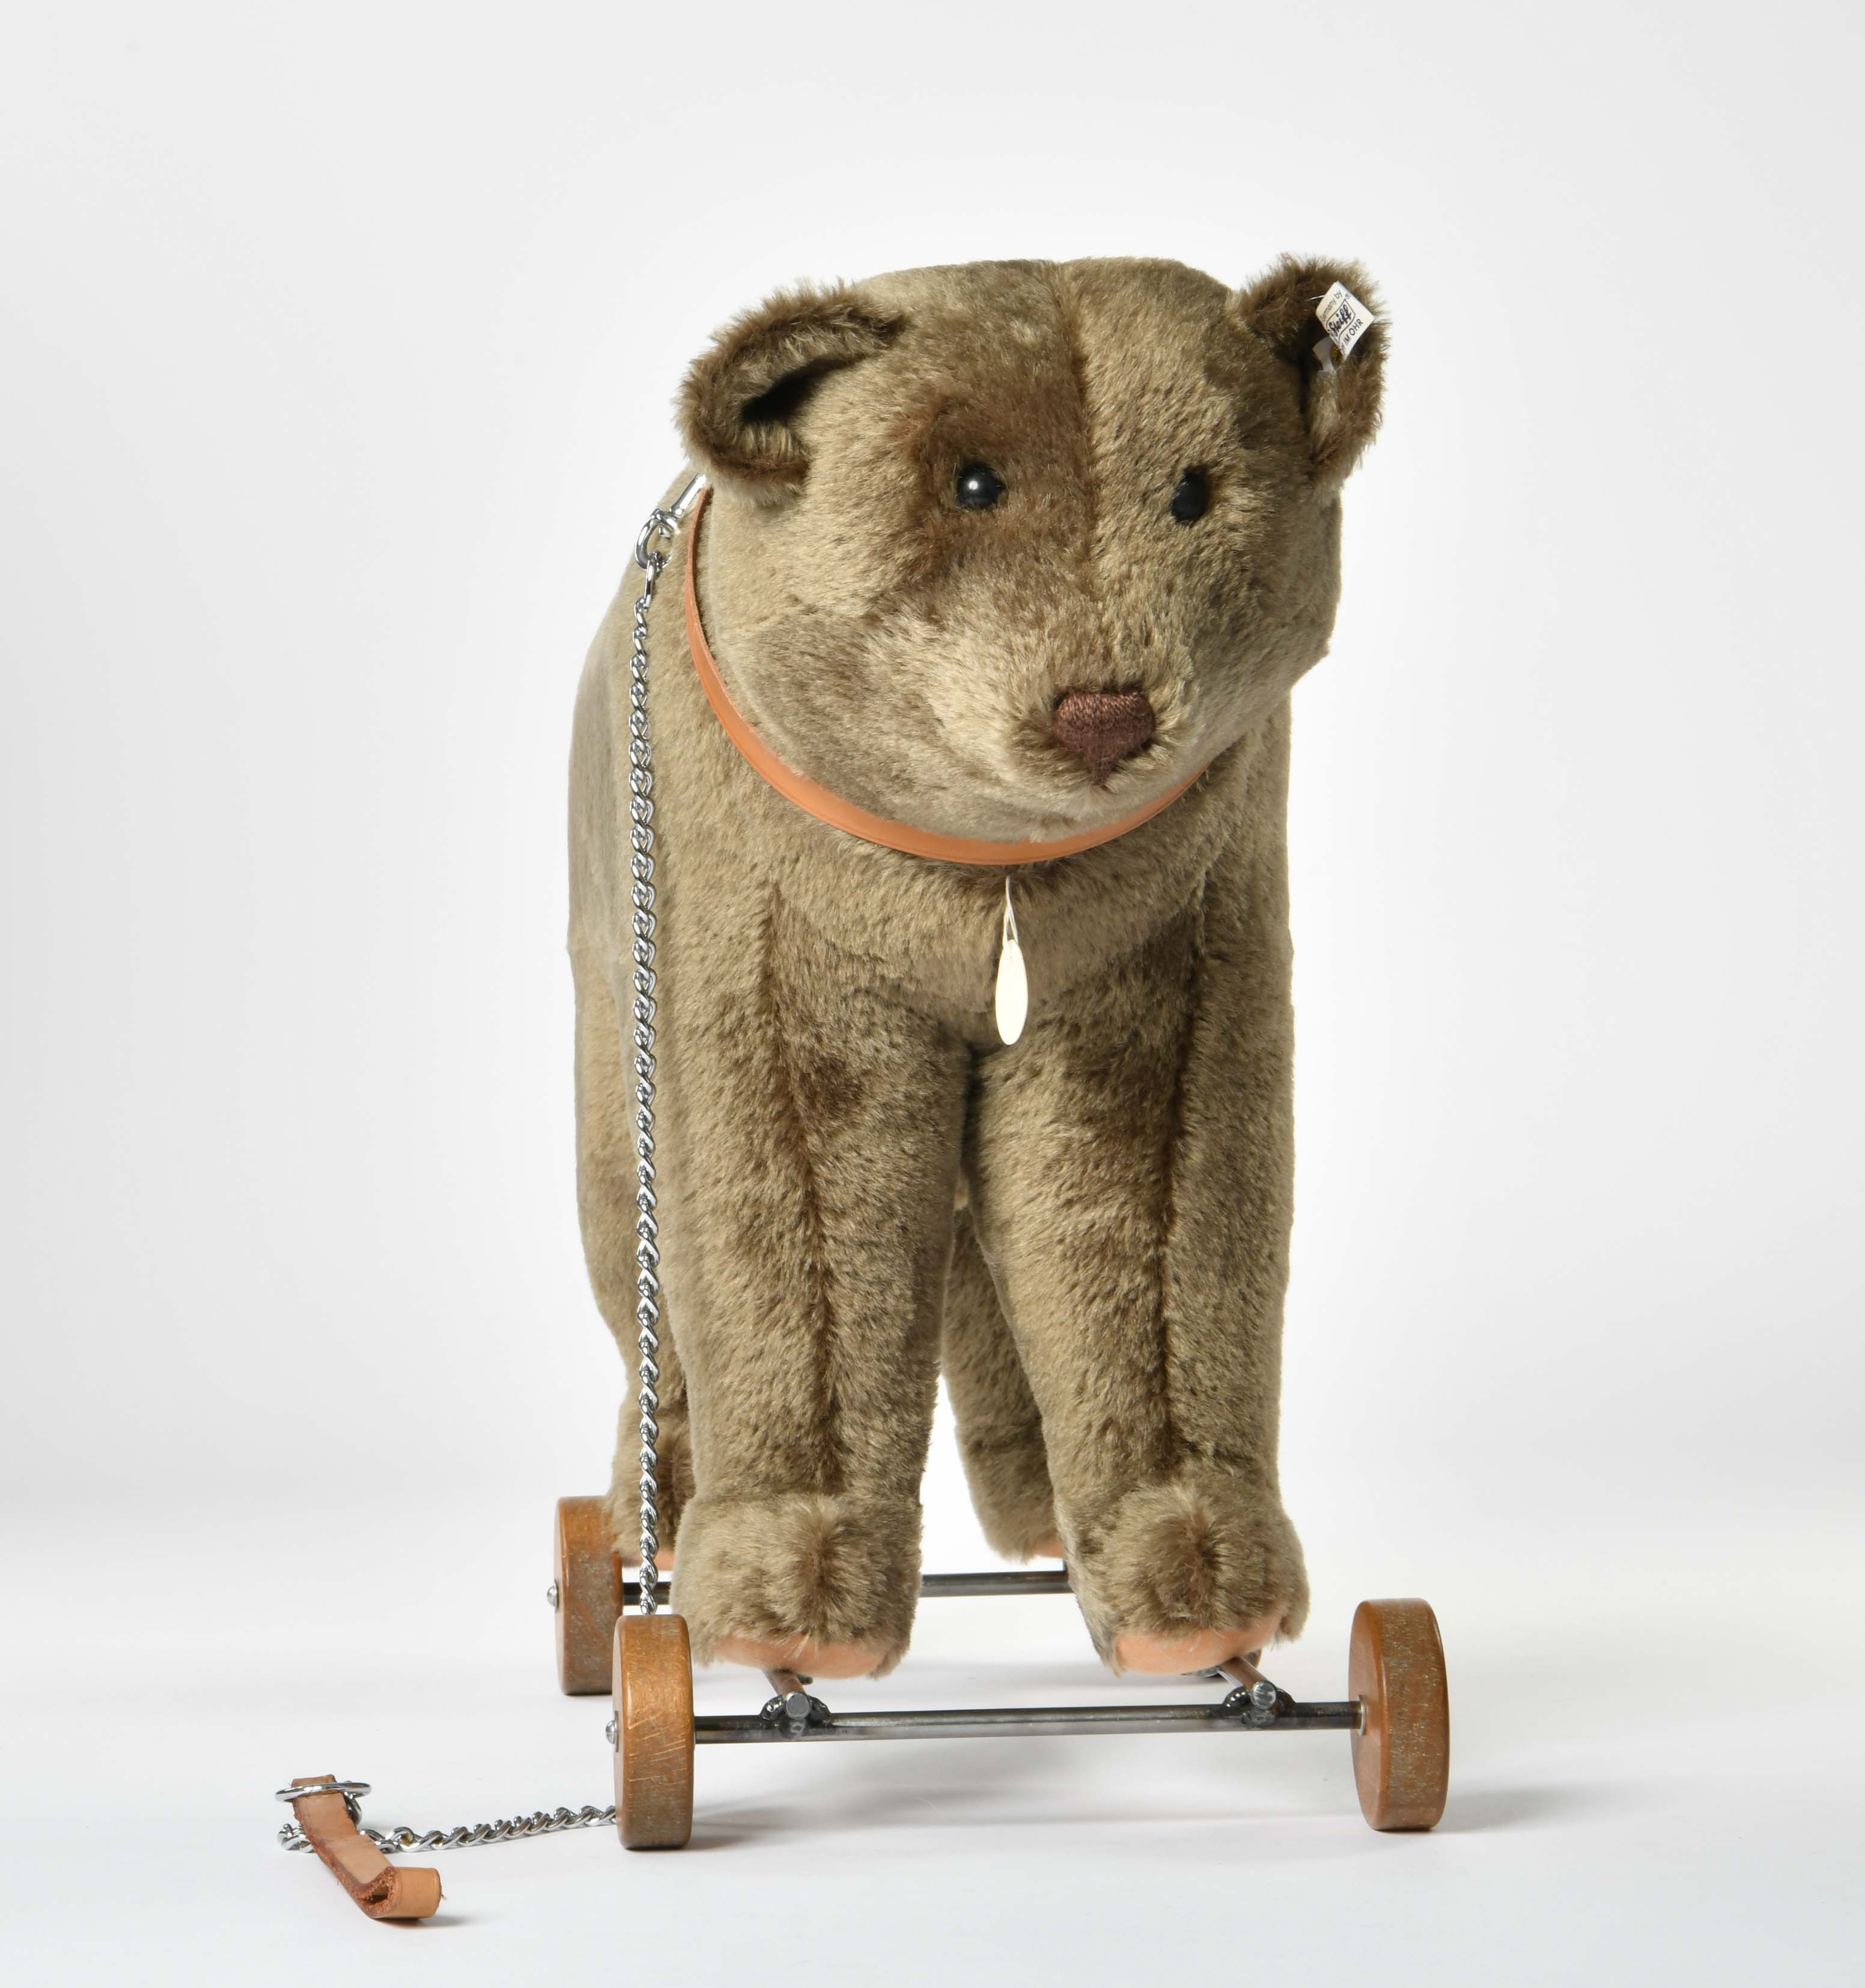 Steiff, bear on wheels 400384, replica, 43 cm, box, C 1